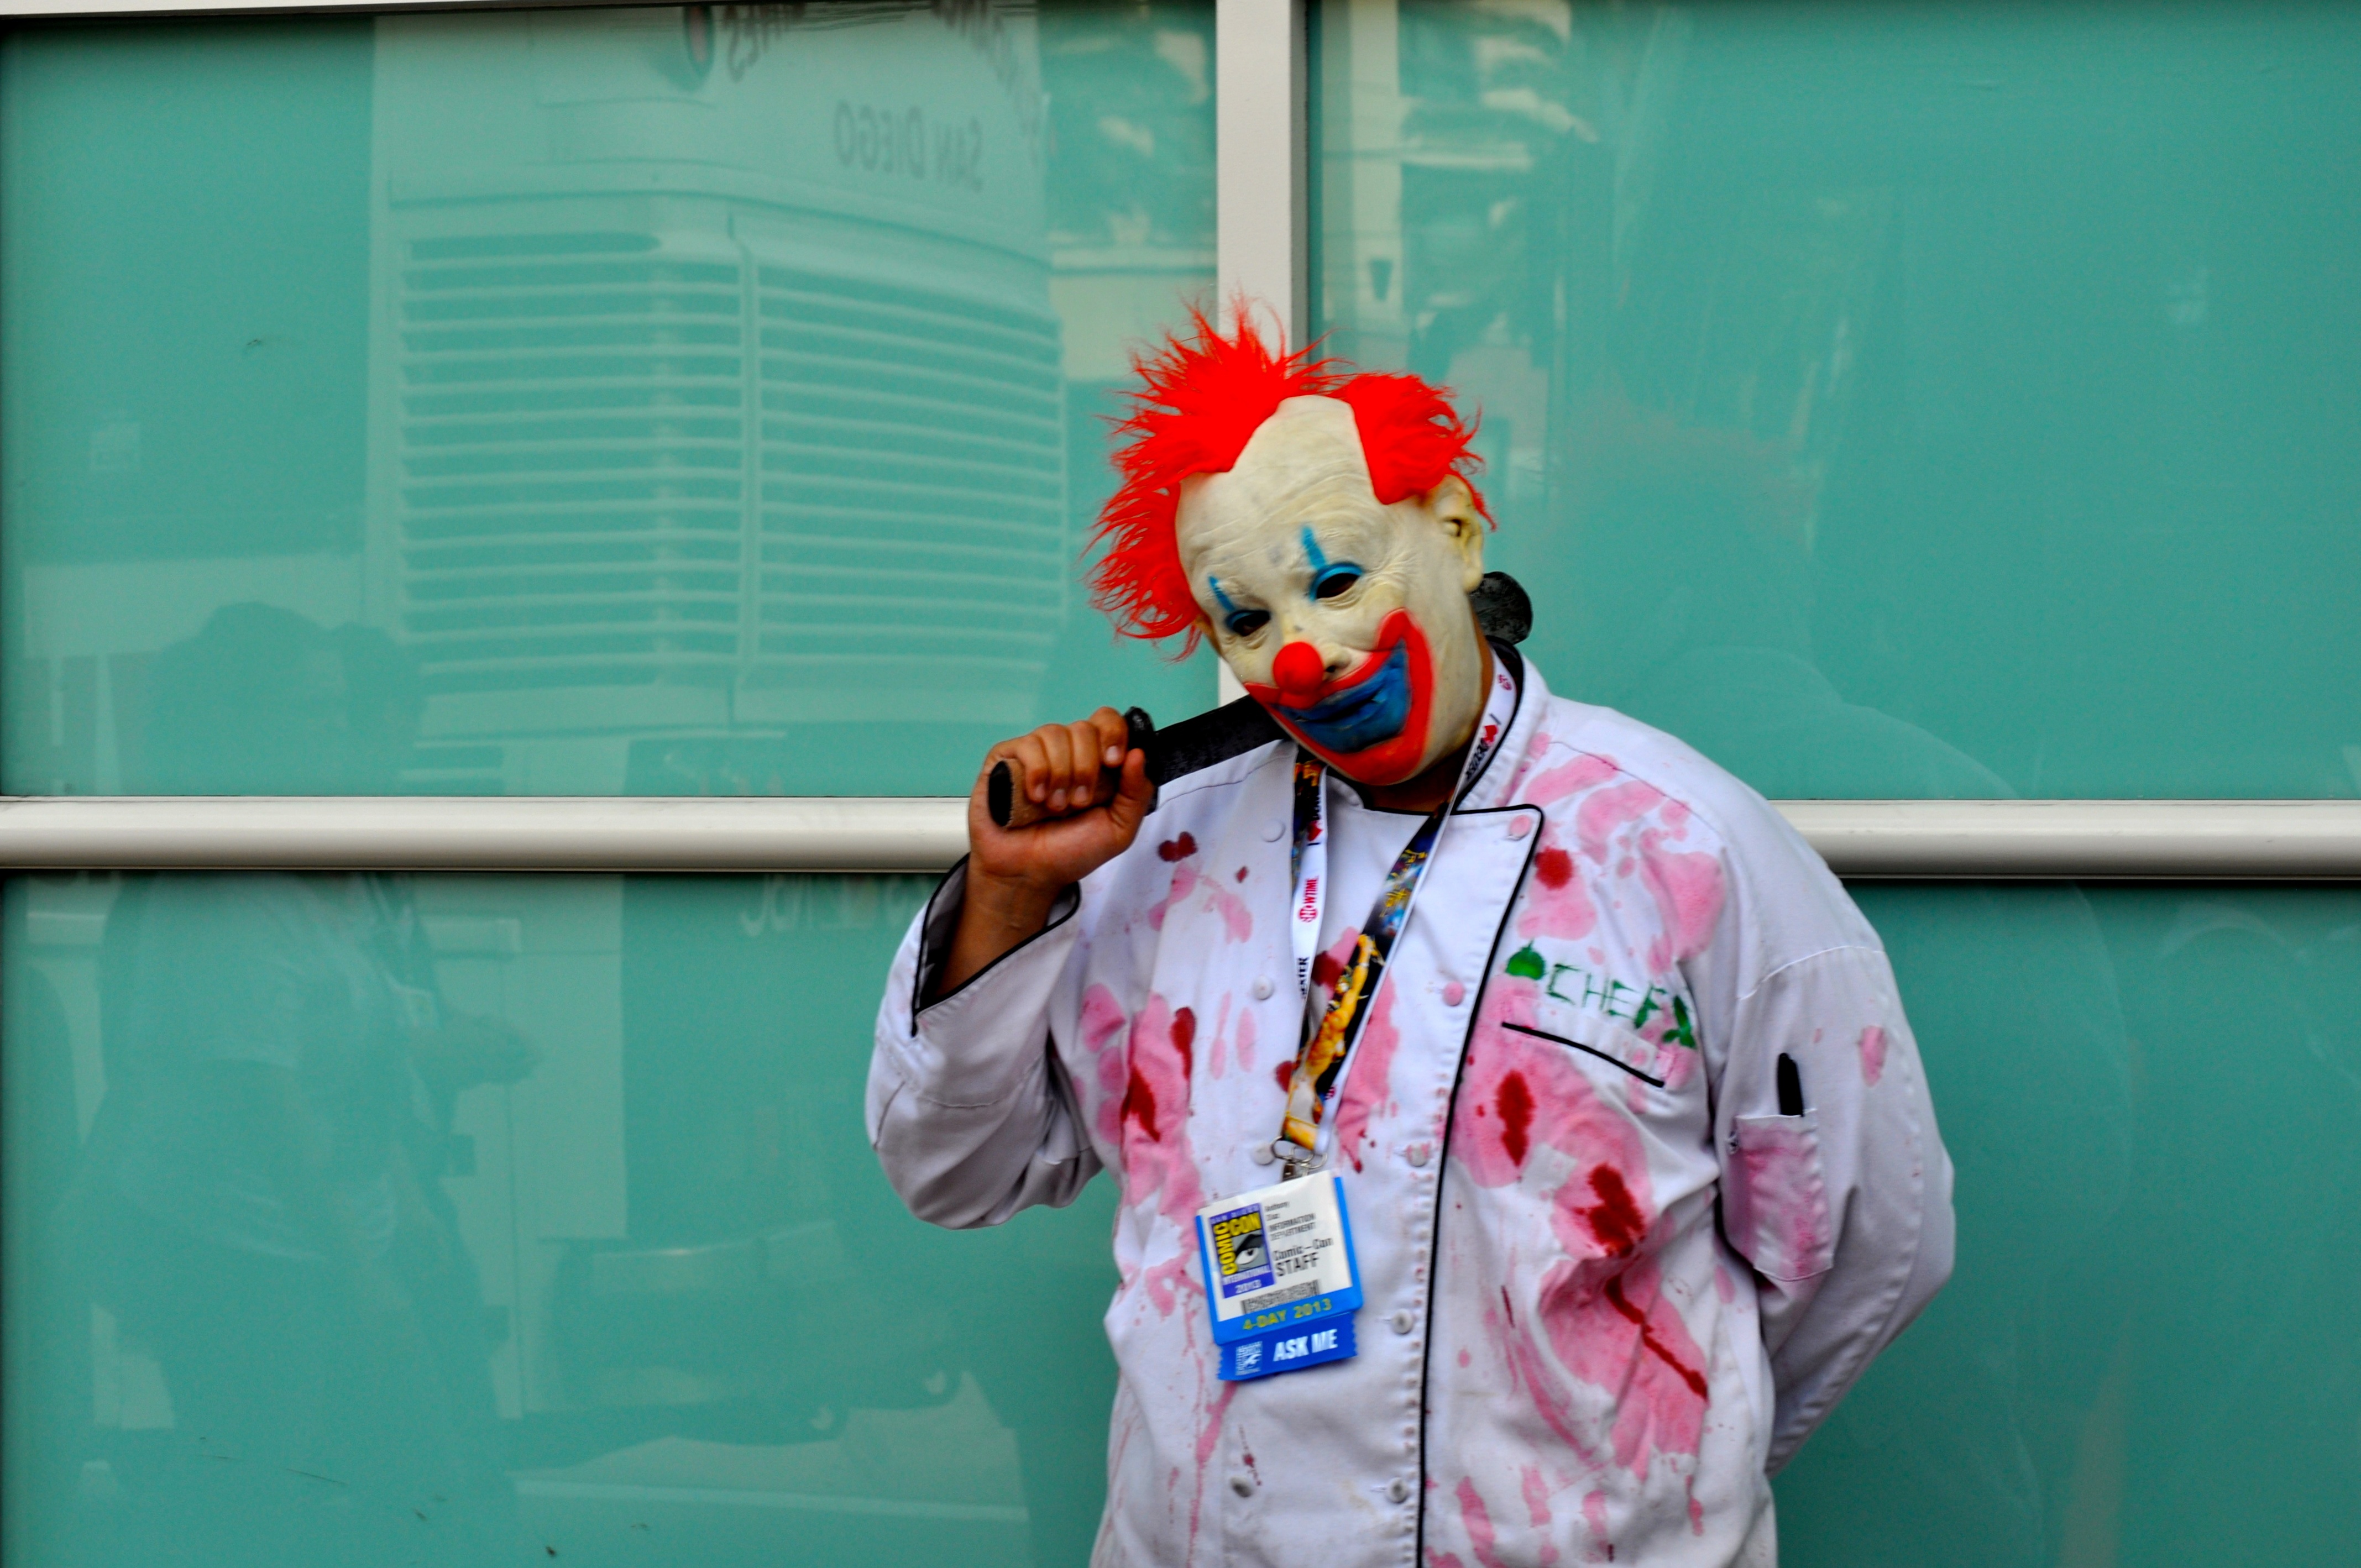 Photo: Killer clown cosplayer. Photo courtesy of Wikimedia Commons.